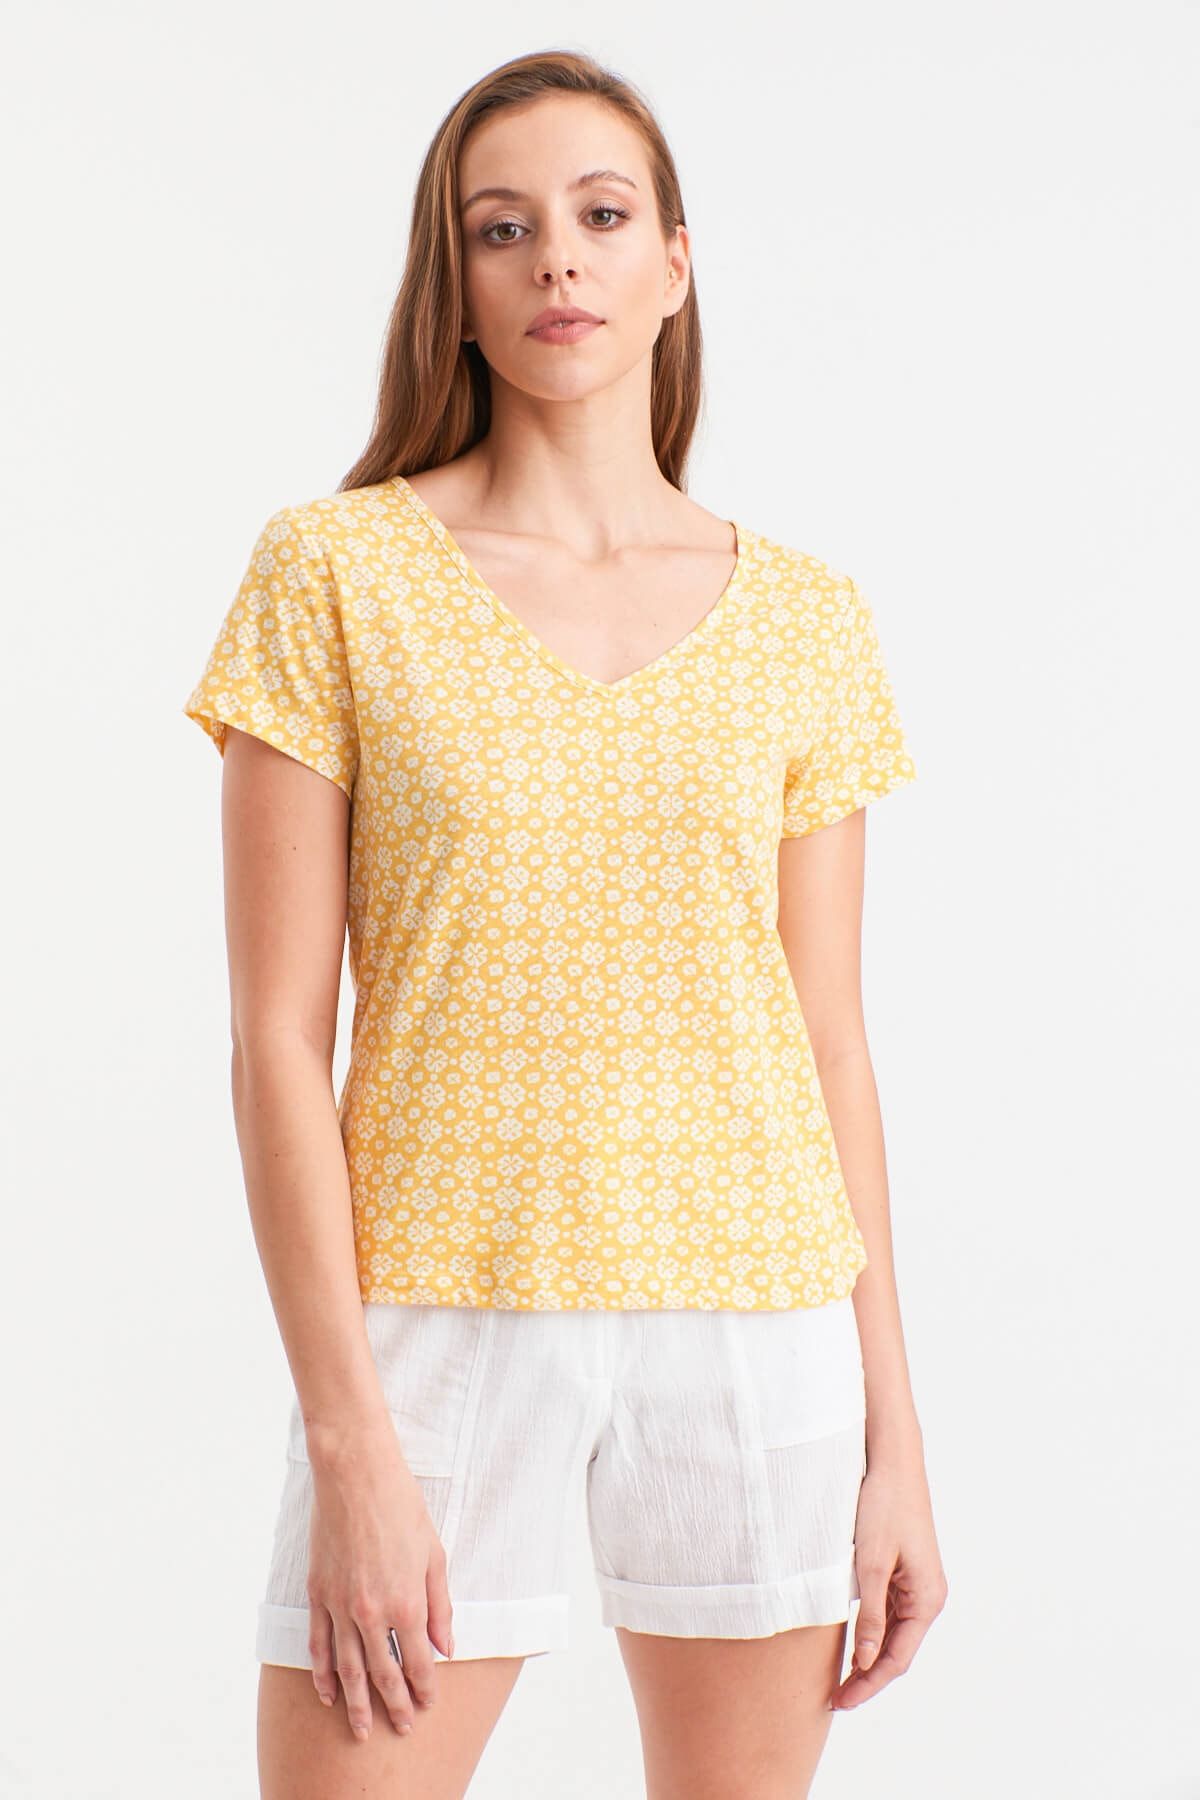 Hanna's Kadın Sarı Sarı V Yaka Çiçekli T-shirt